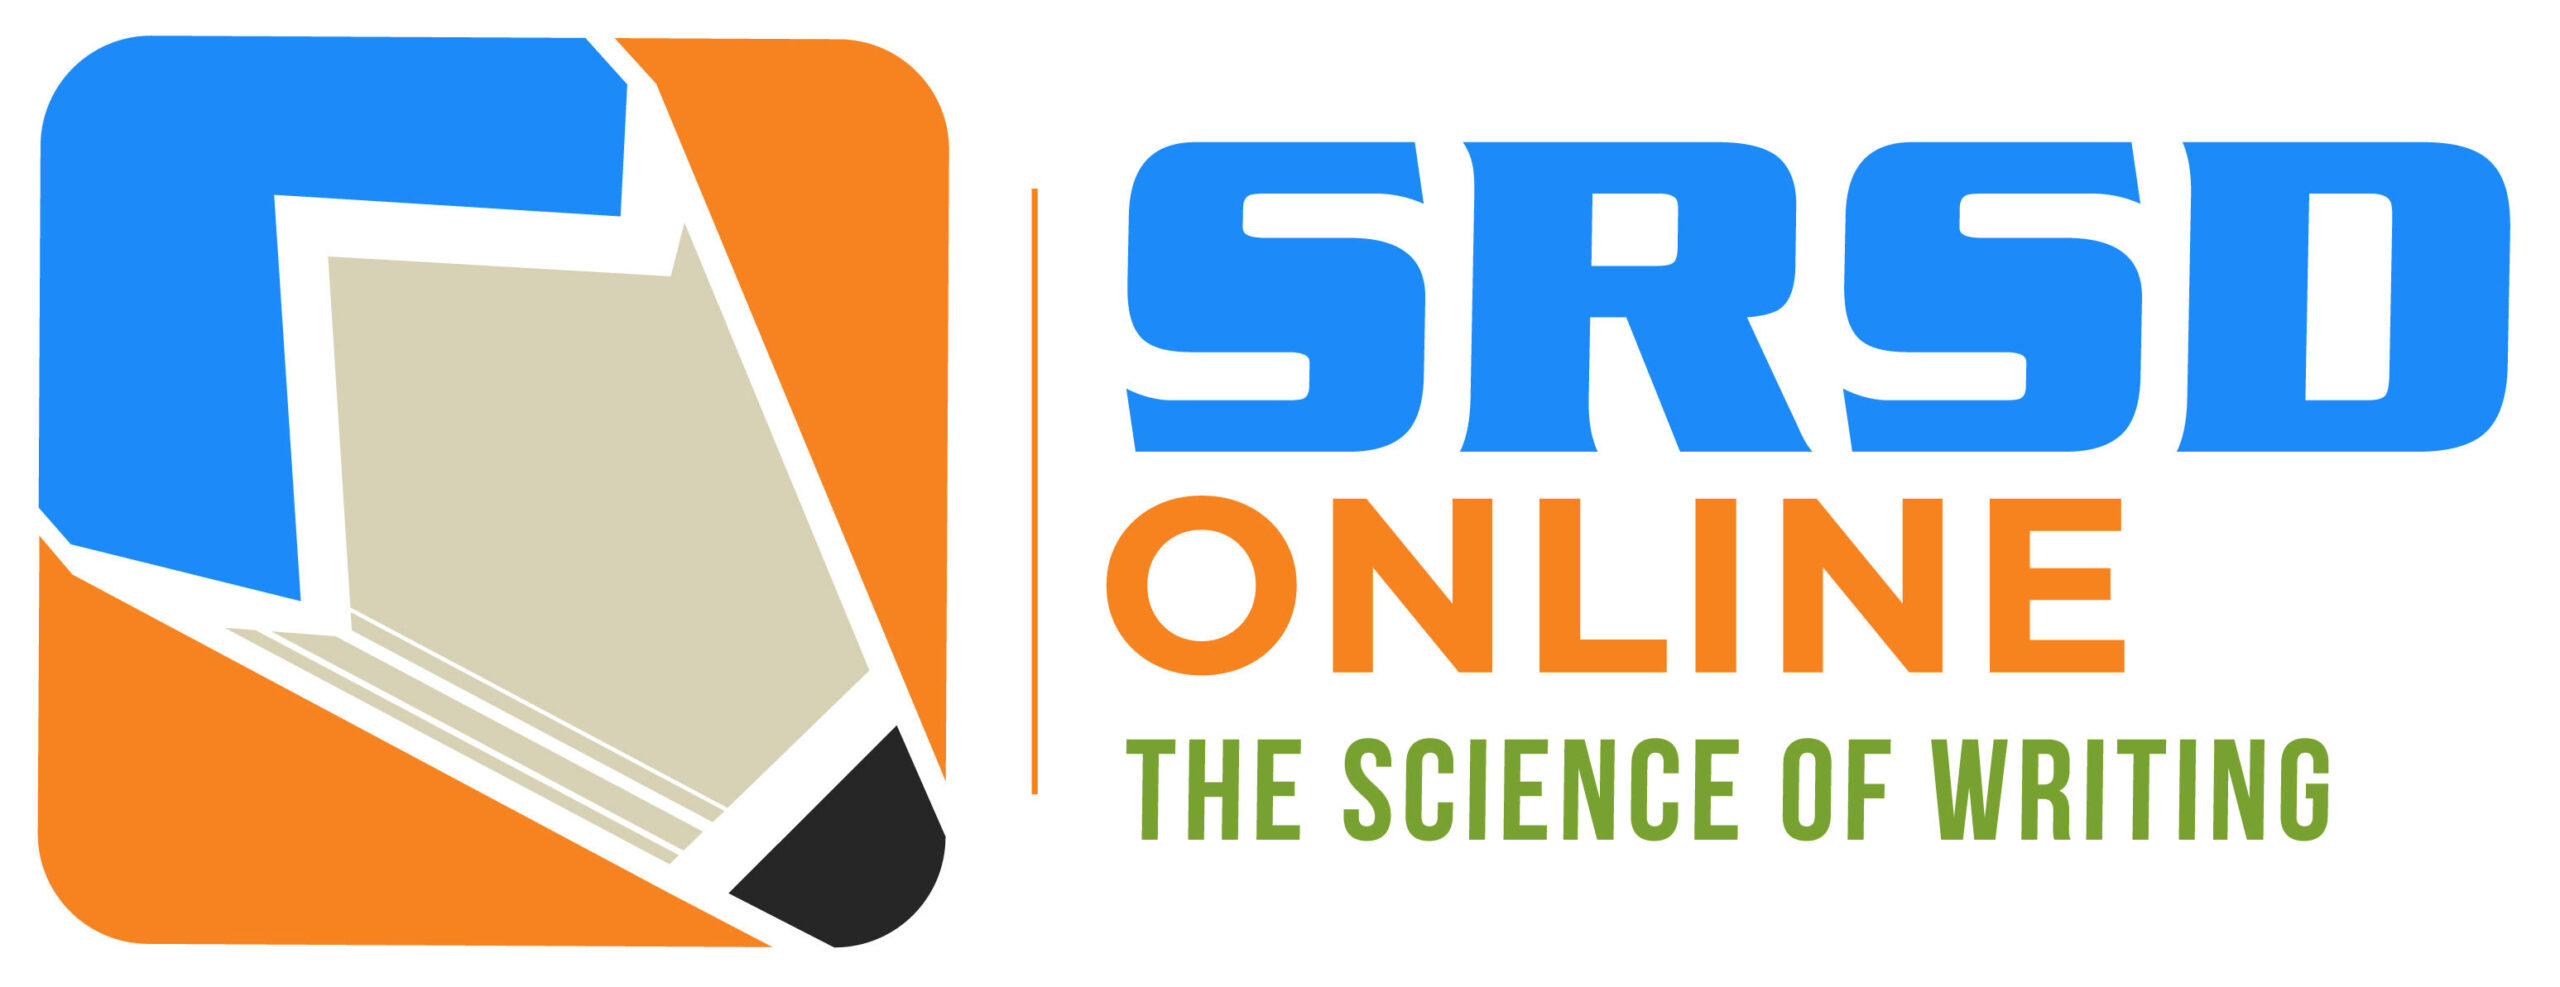 SRSD Online